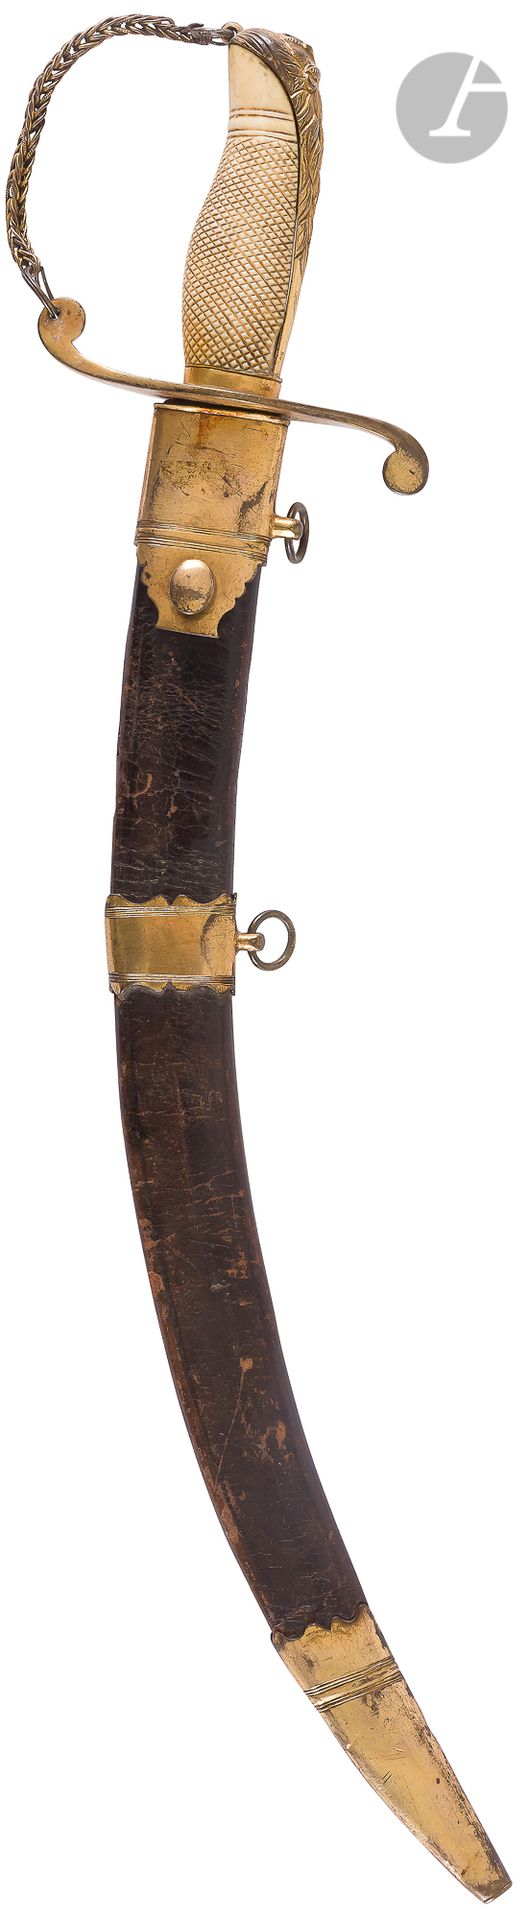 Null 英国海军军官的匕首。
格纹象牙手柄。鎏金黄铜安装。弧形雕刻的刀片。皮革刀鞘，有三个镀金和切割的铜配件。
A.B.E. 乔治三世时期。